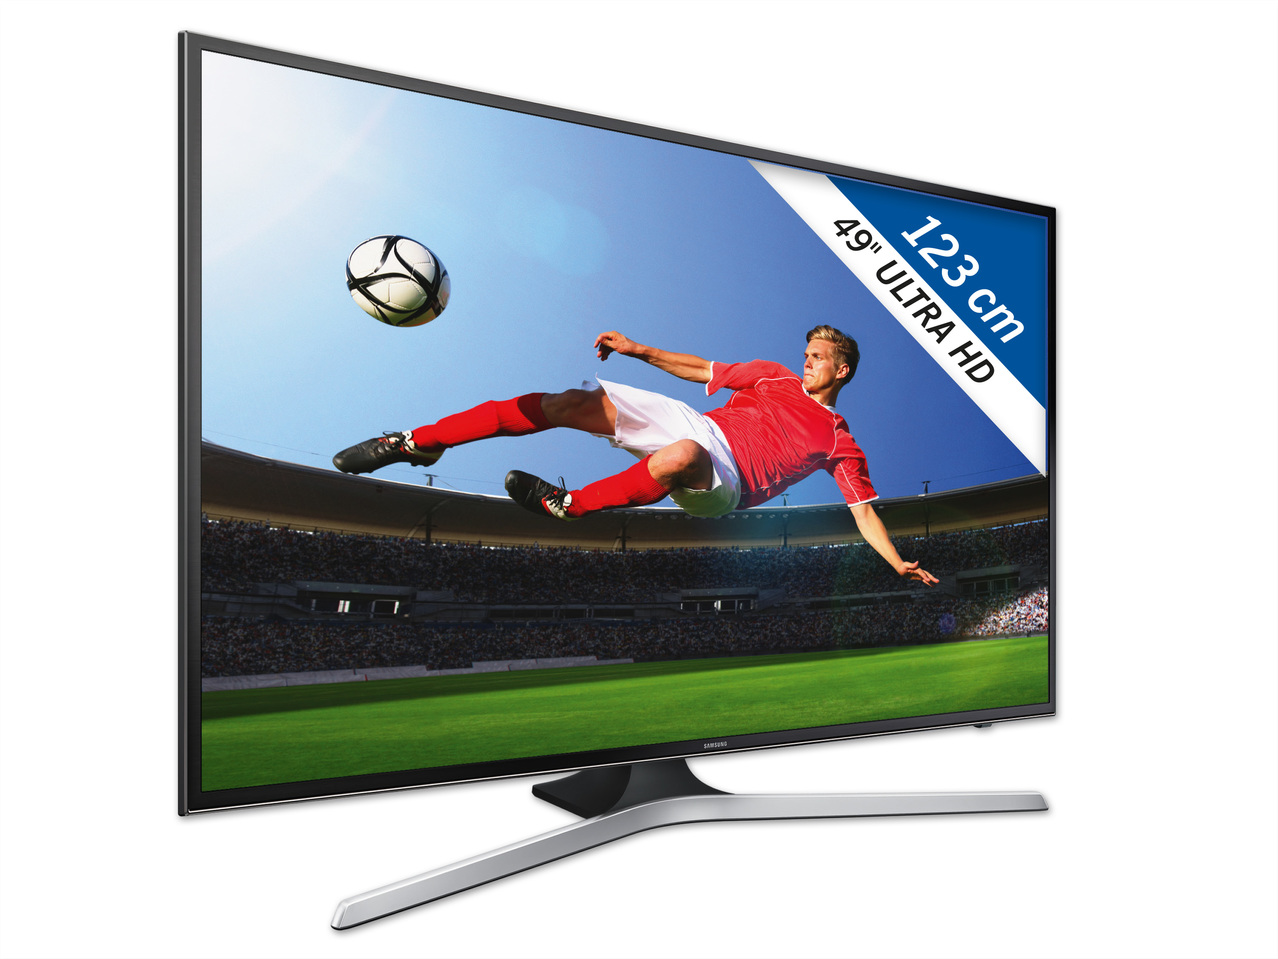 SAMSUNG(R) 49" ULTRA HD SMART TV UE49MU6190 (123 CM)